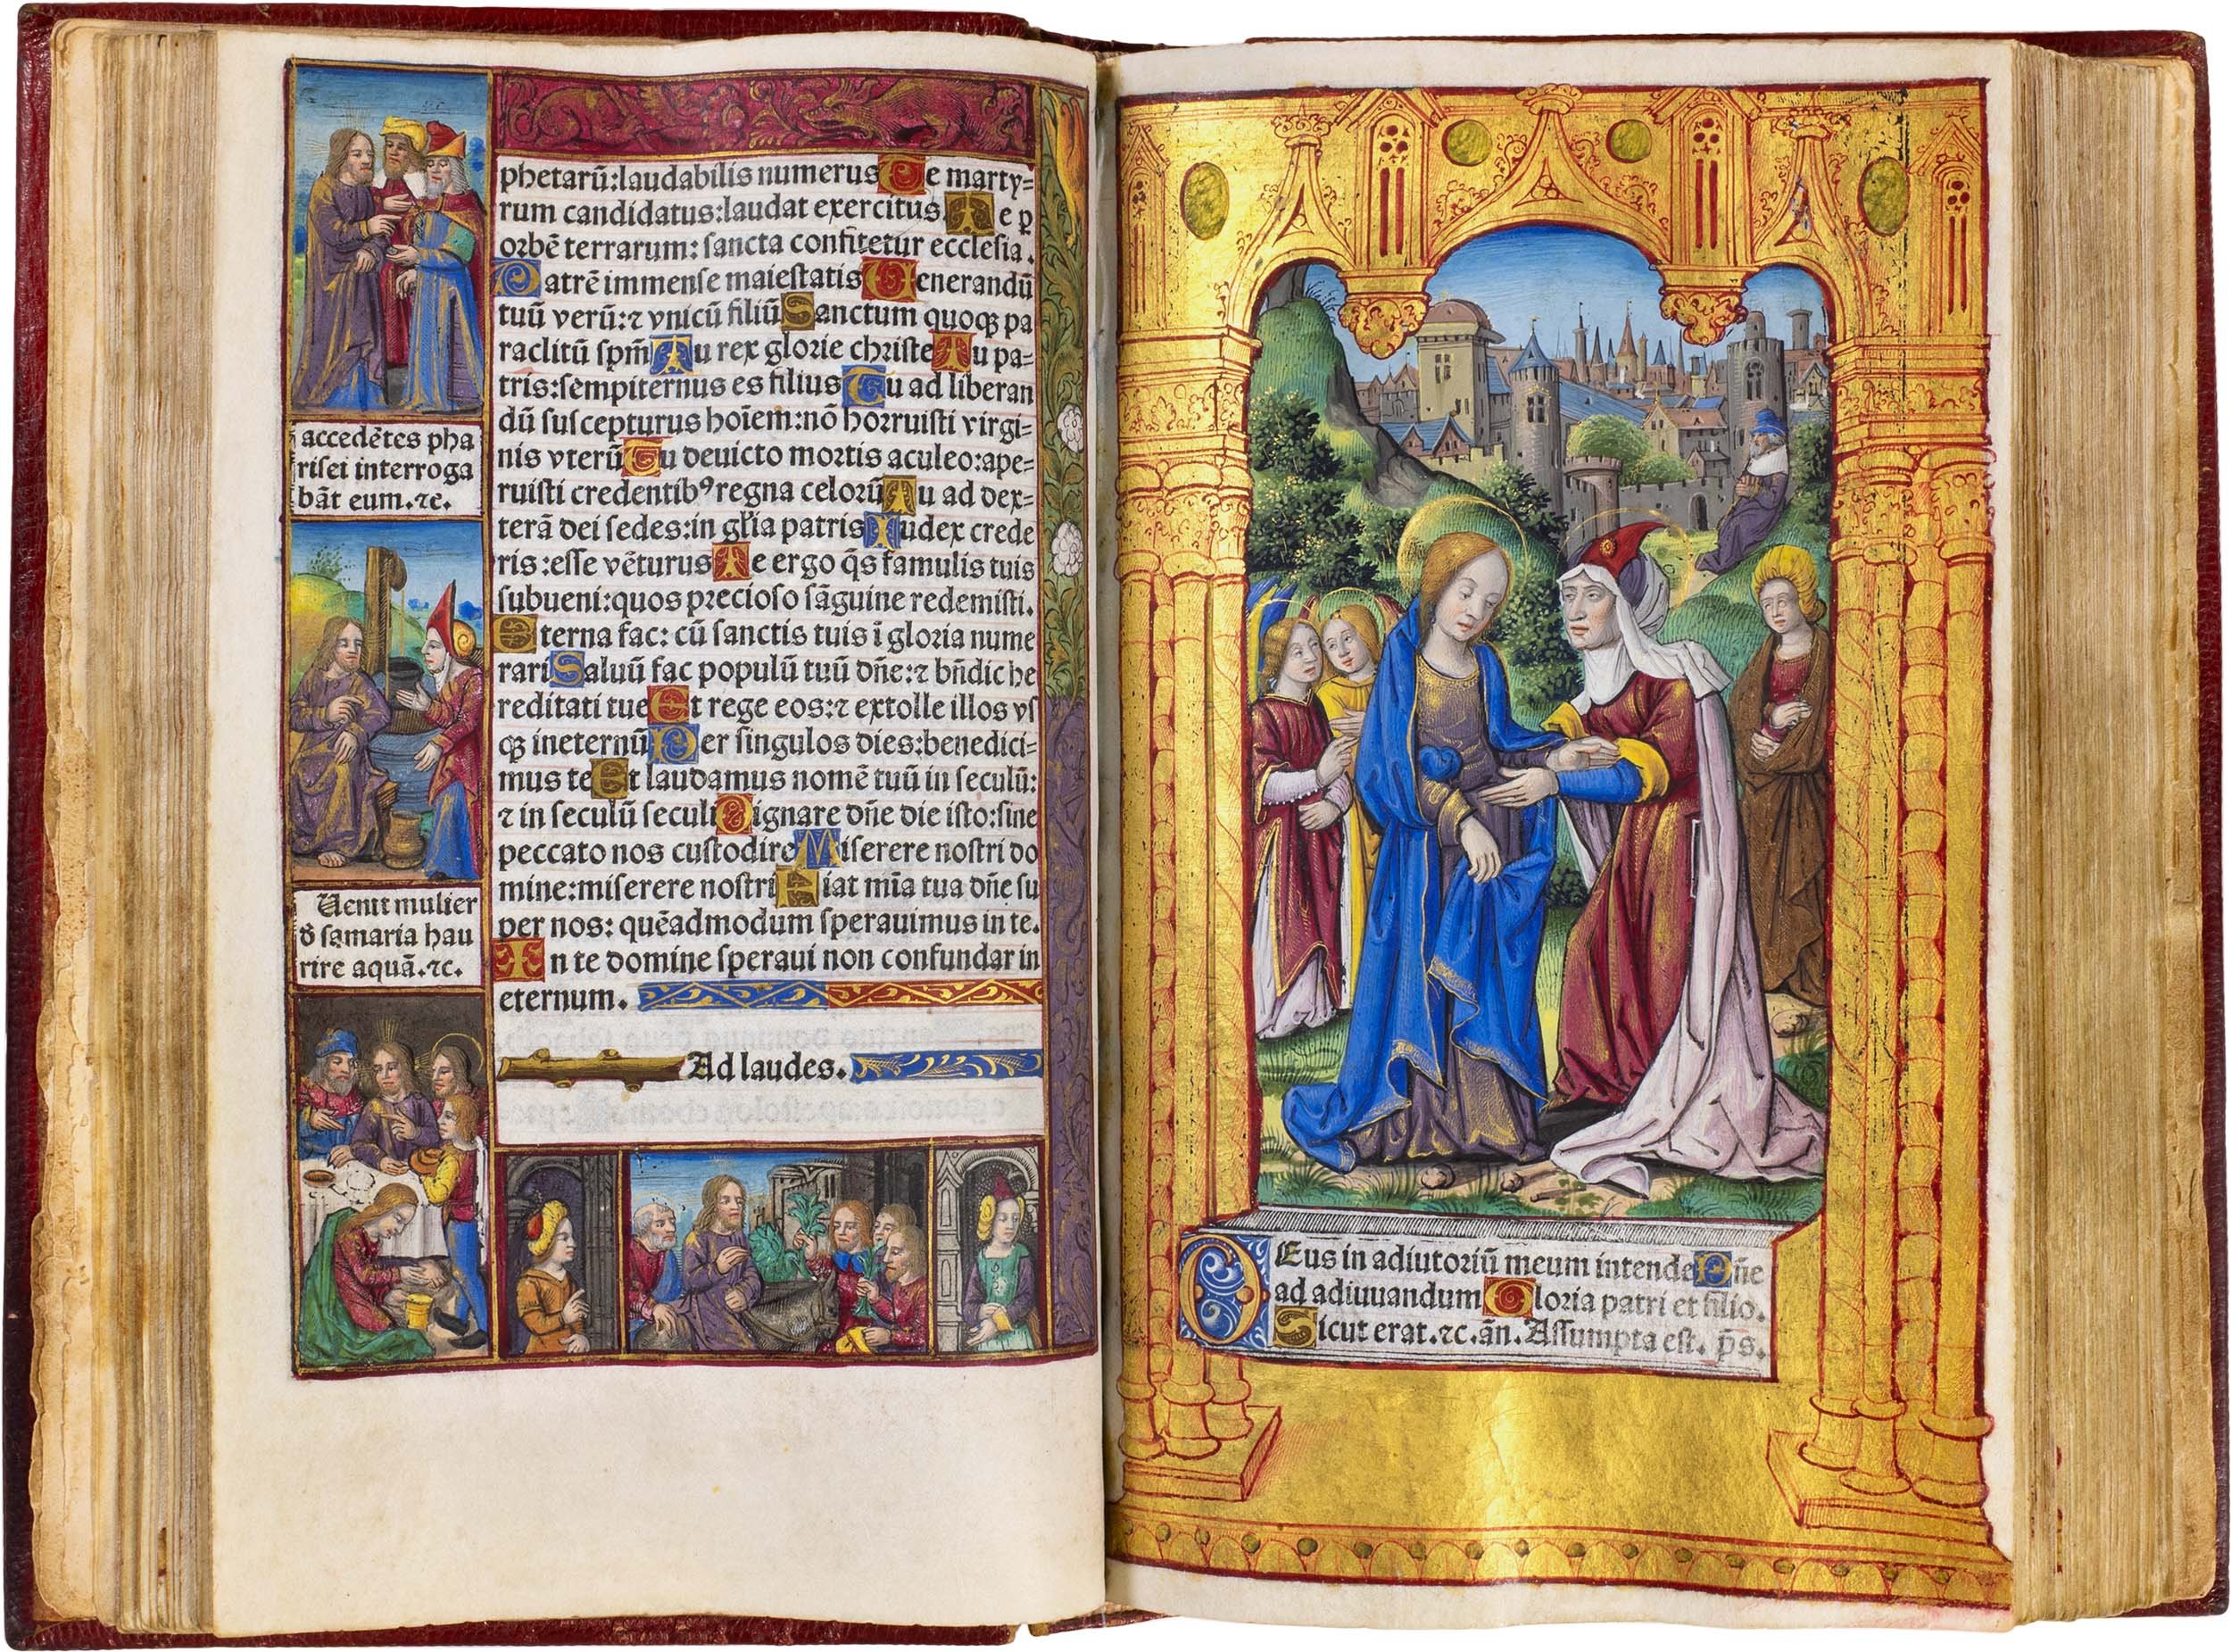 Horae-bmv-book-of-hours-Louis-XII-martainville-master-philippa-guelders-paris-pigouchet-vostre-15.10.1499-27.jpg